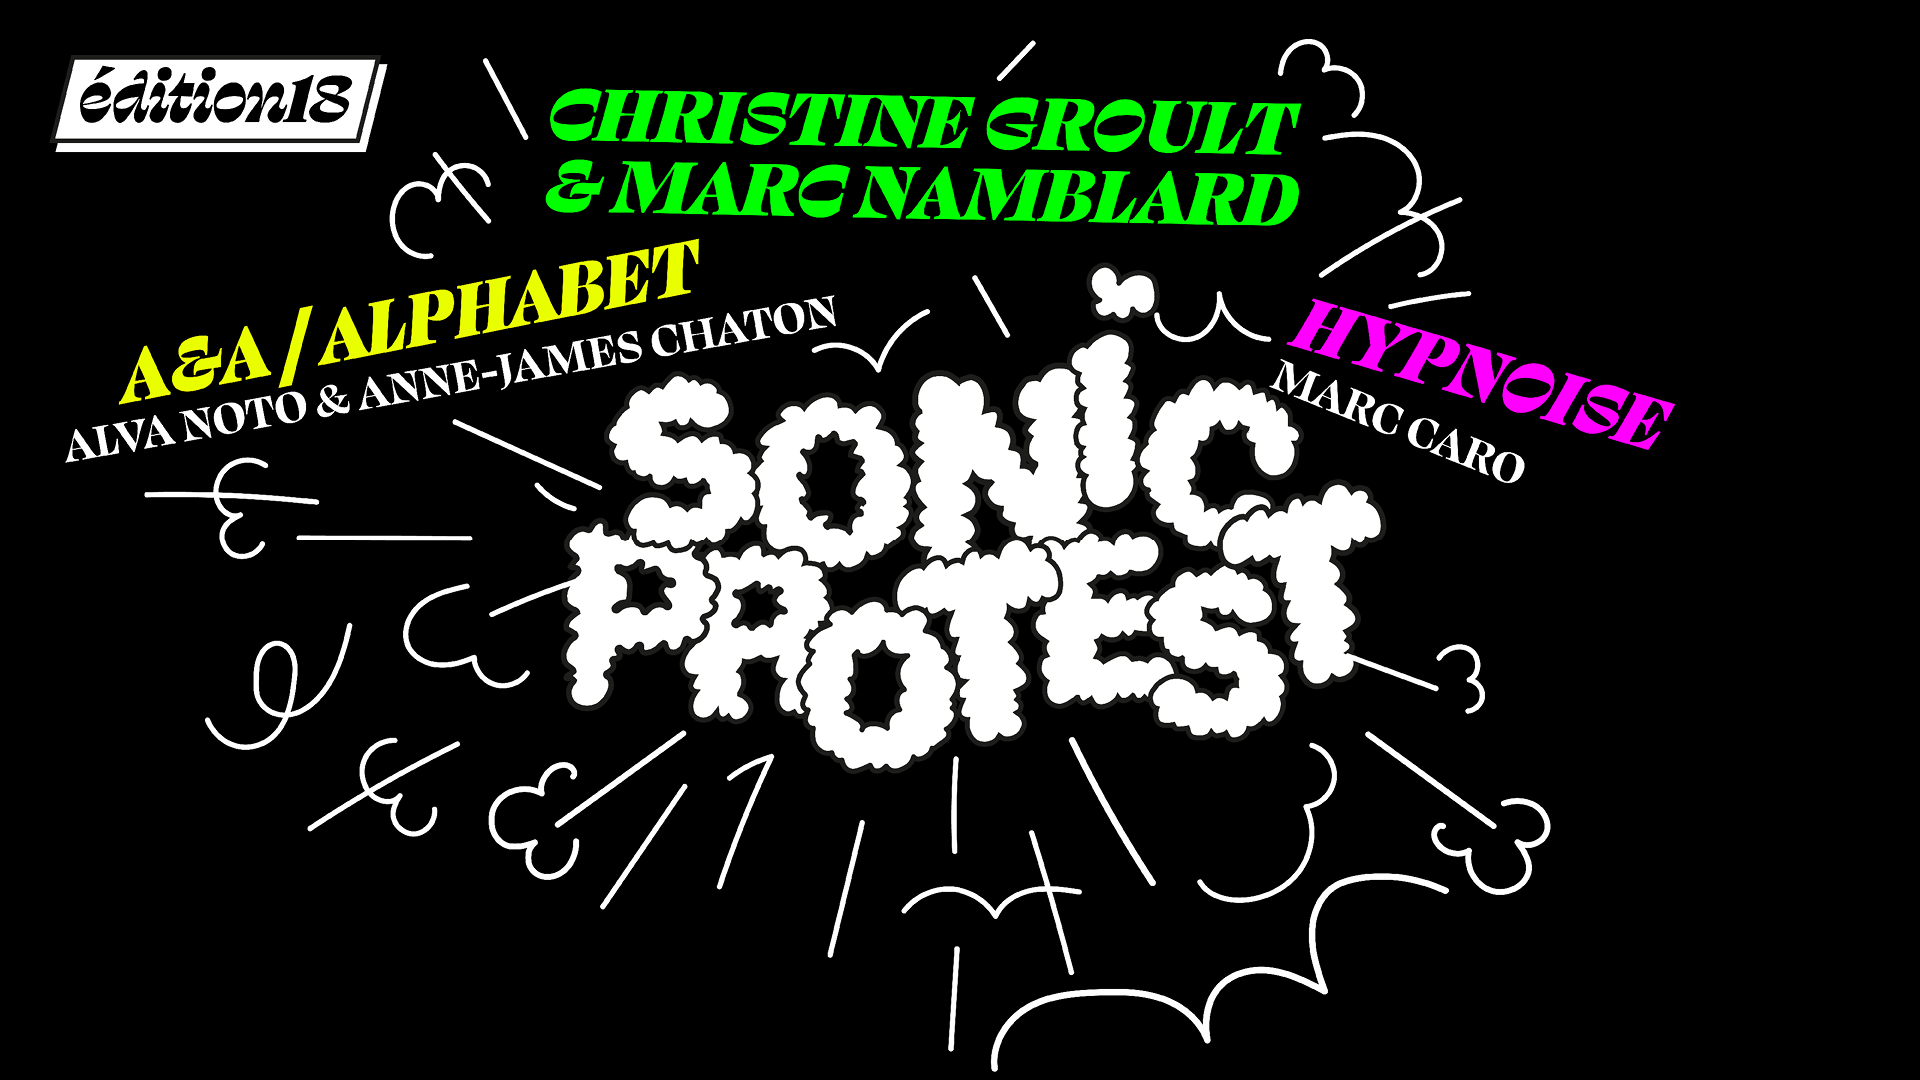 Sonic Protest&nbsp;: A&A / Alphabet (Alva Noto & Anne-James Chaton) + Christine Groult + Marc Caro